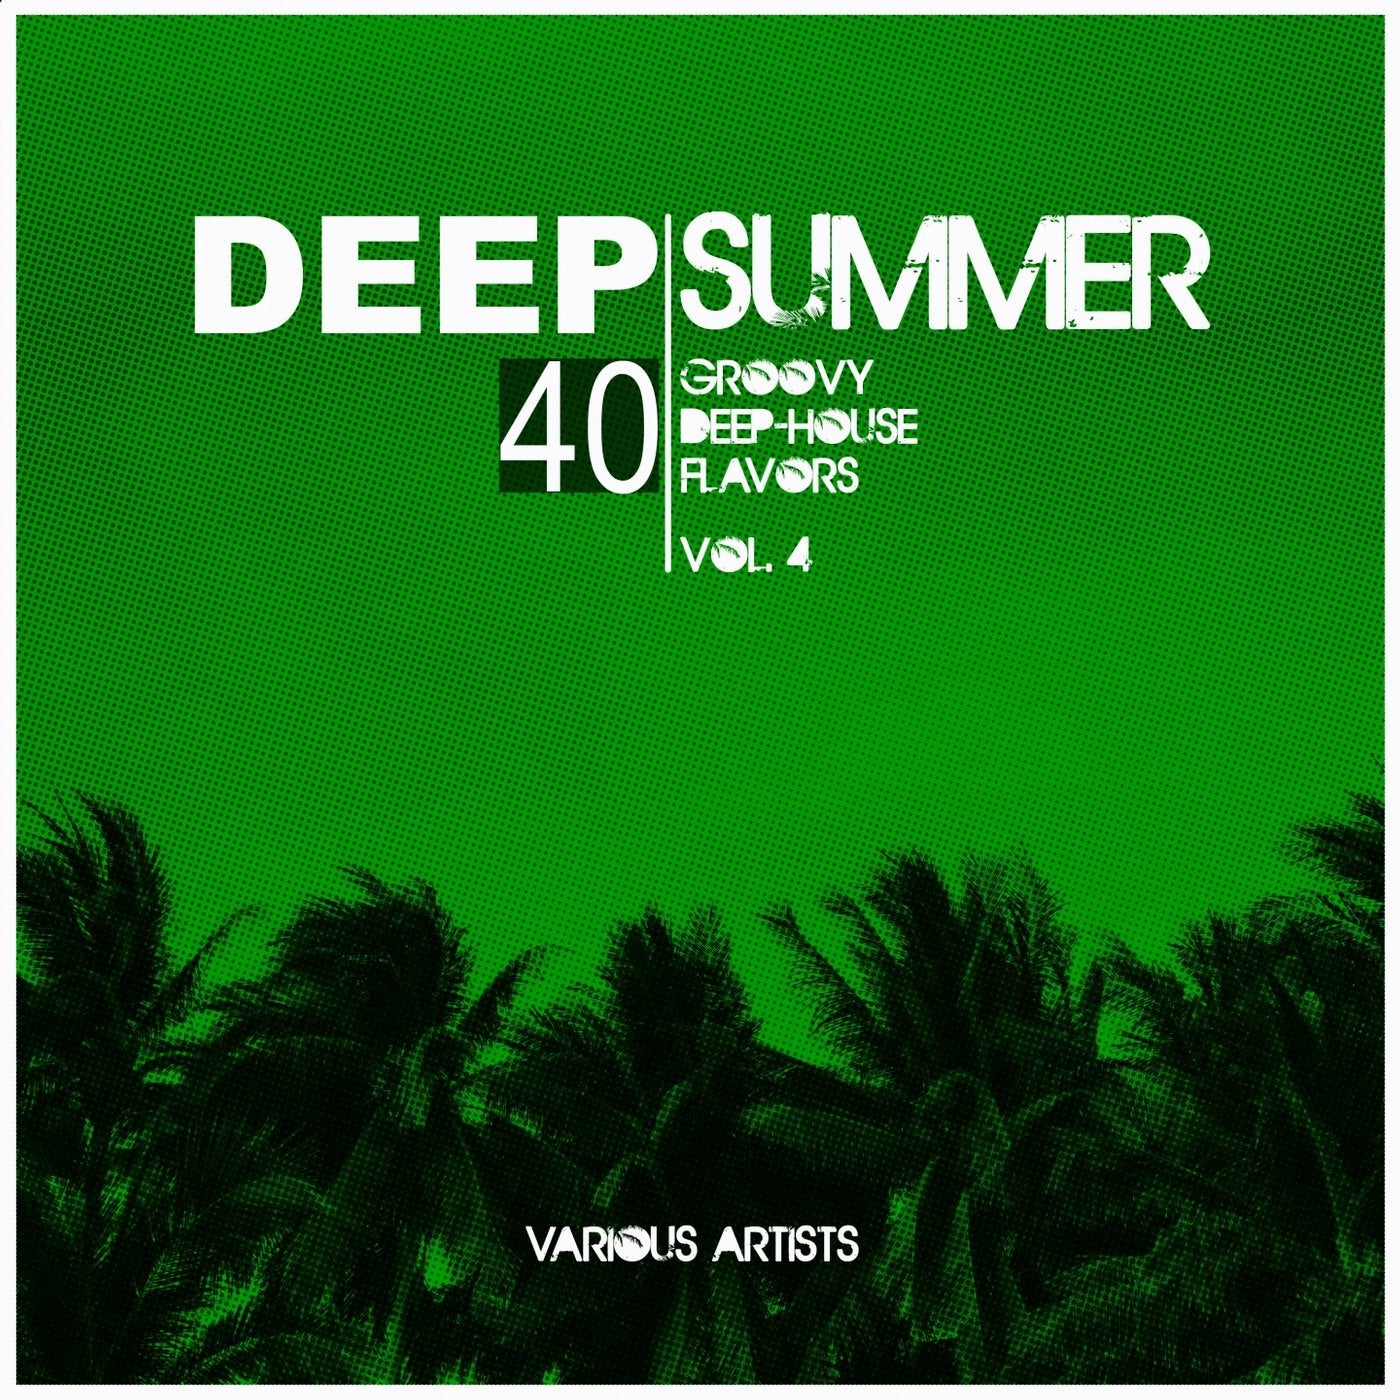 Deep Summer (40 Groovy Deep-House Flavors), Vol. 4